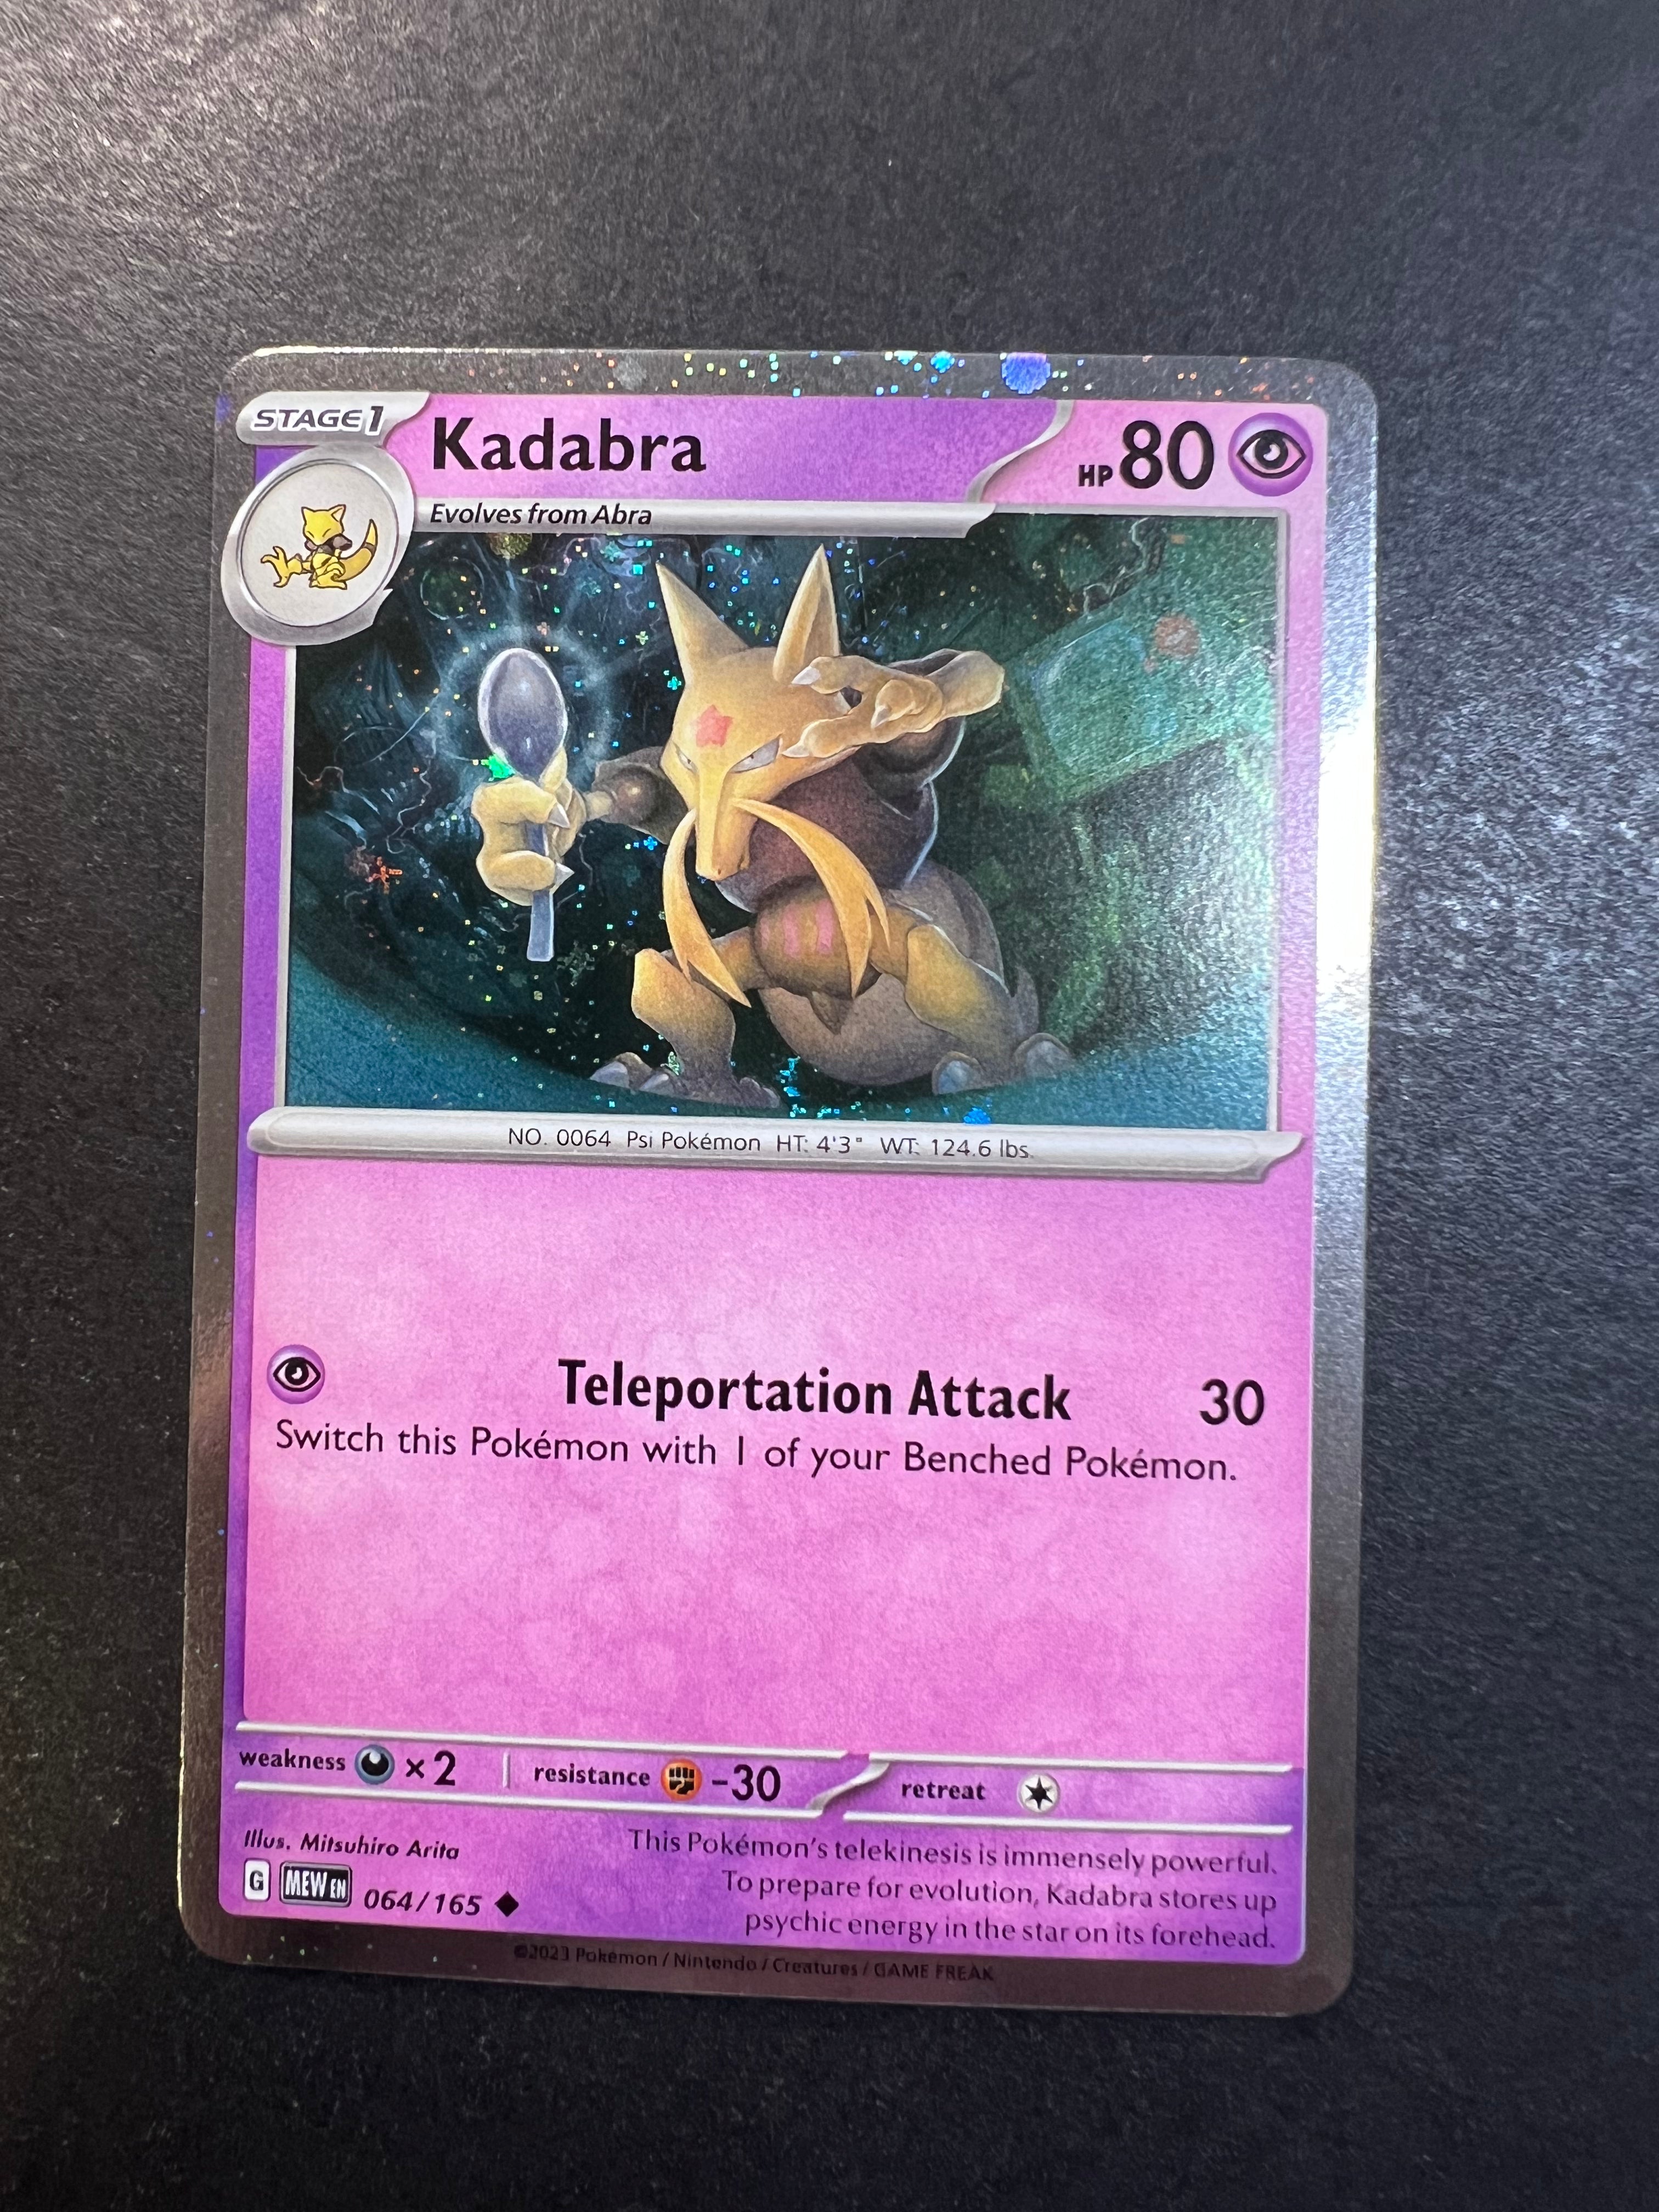 Kadabra (064/165), Busca de Cards